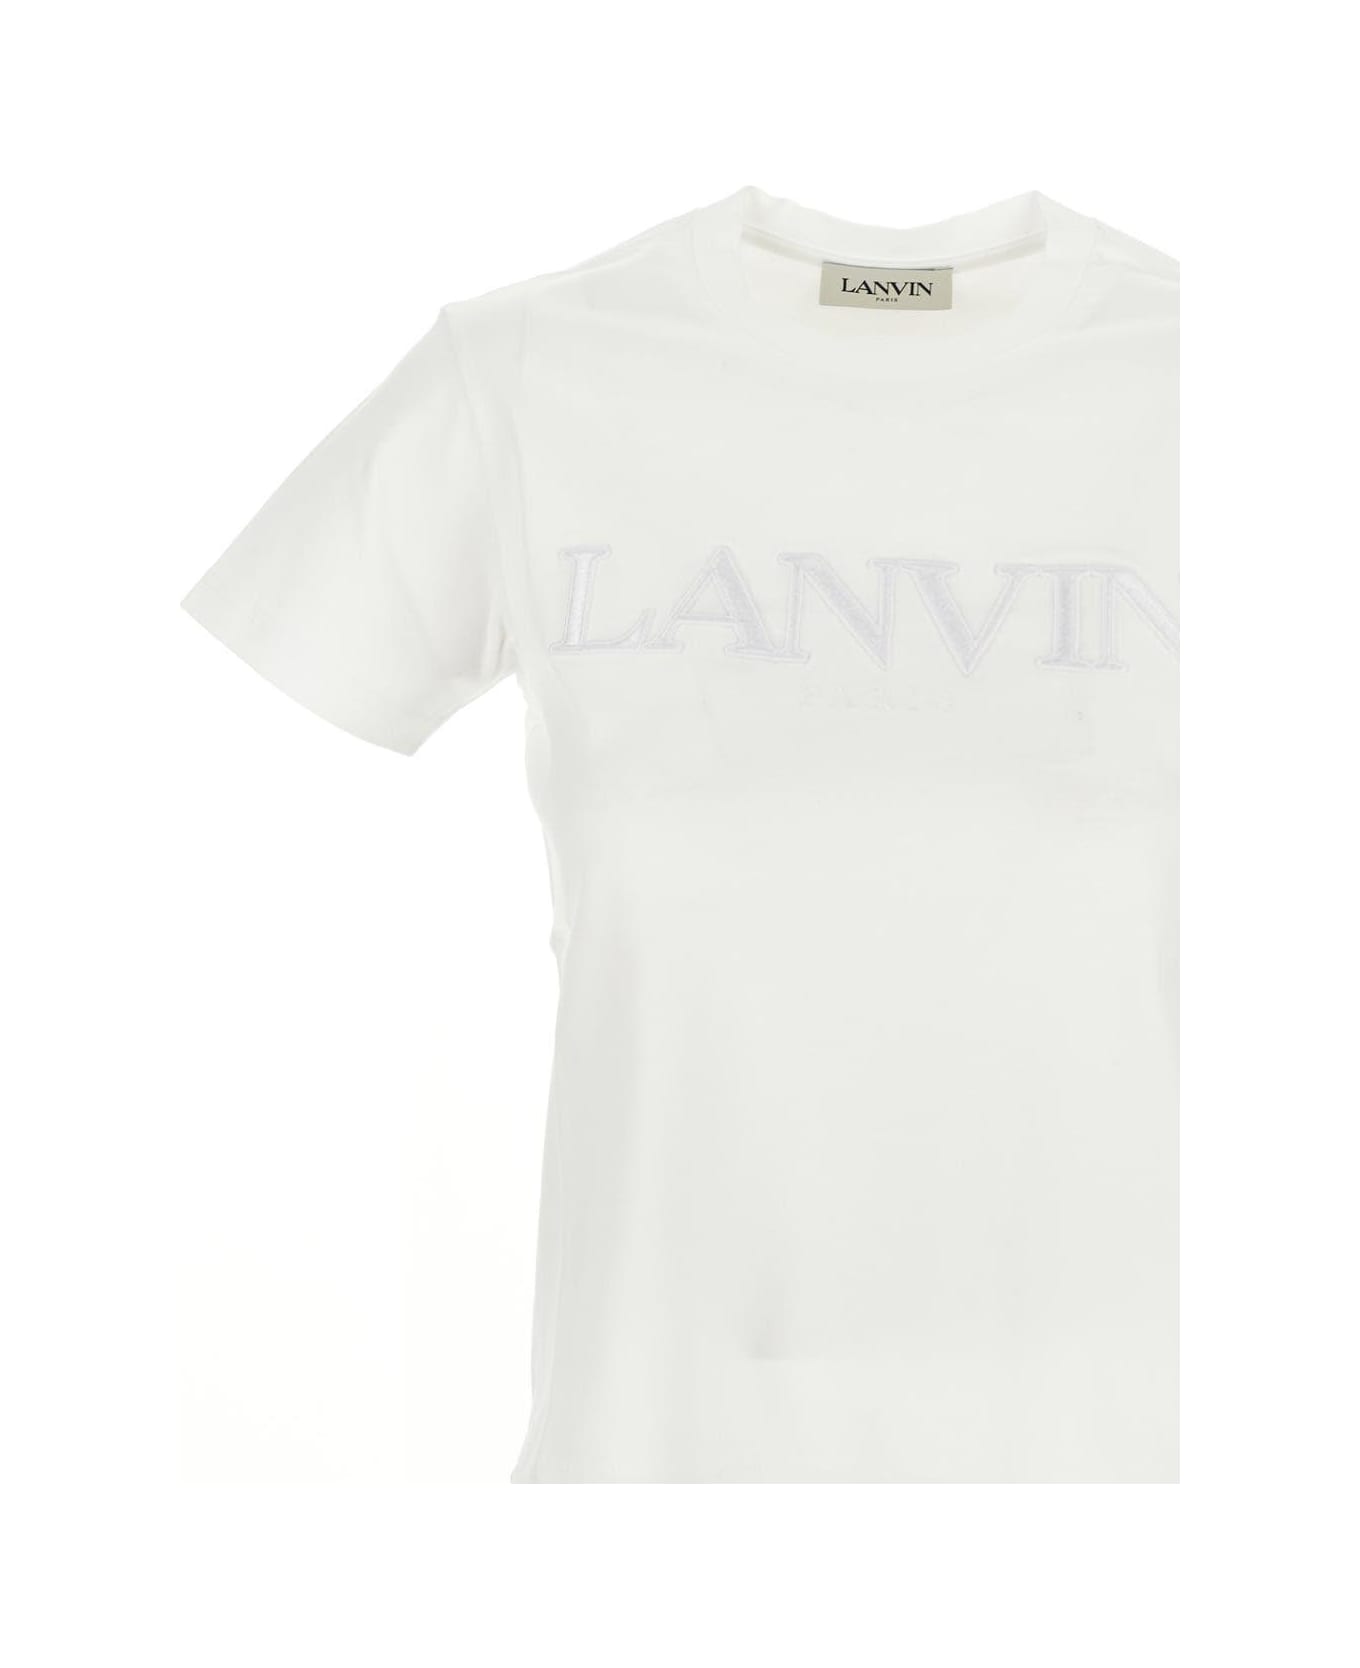 Lanvin Tee T-shirt Tシャツ